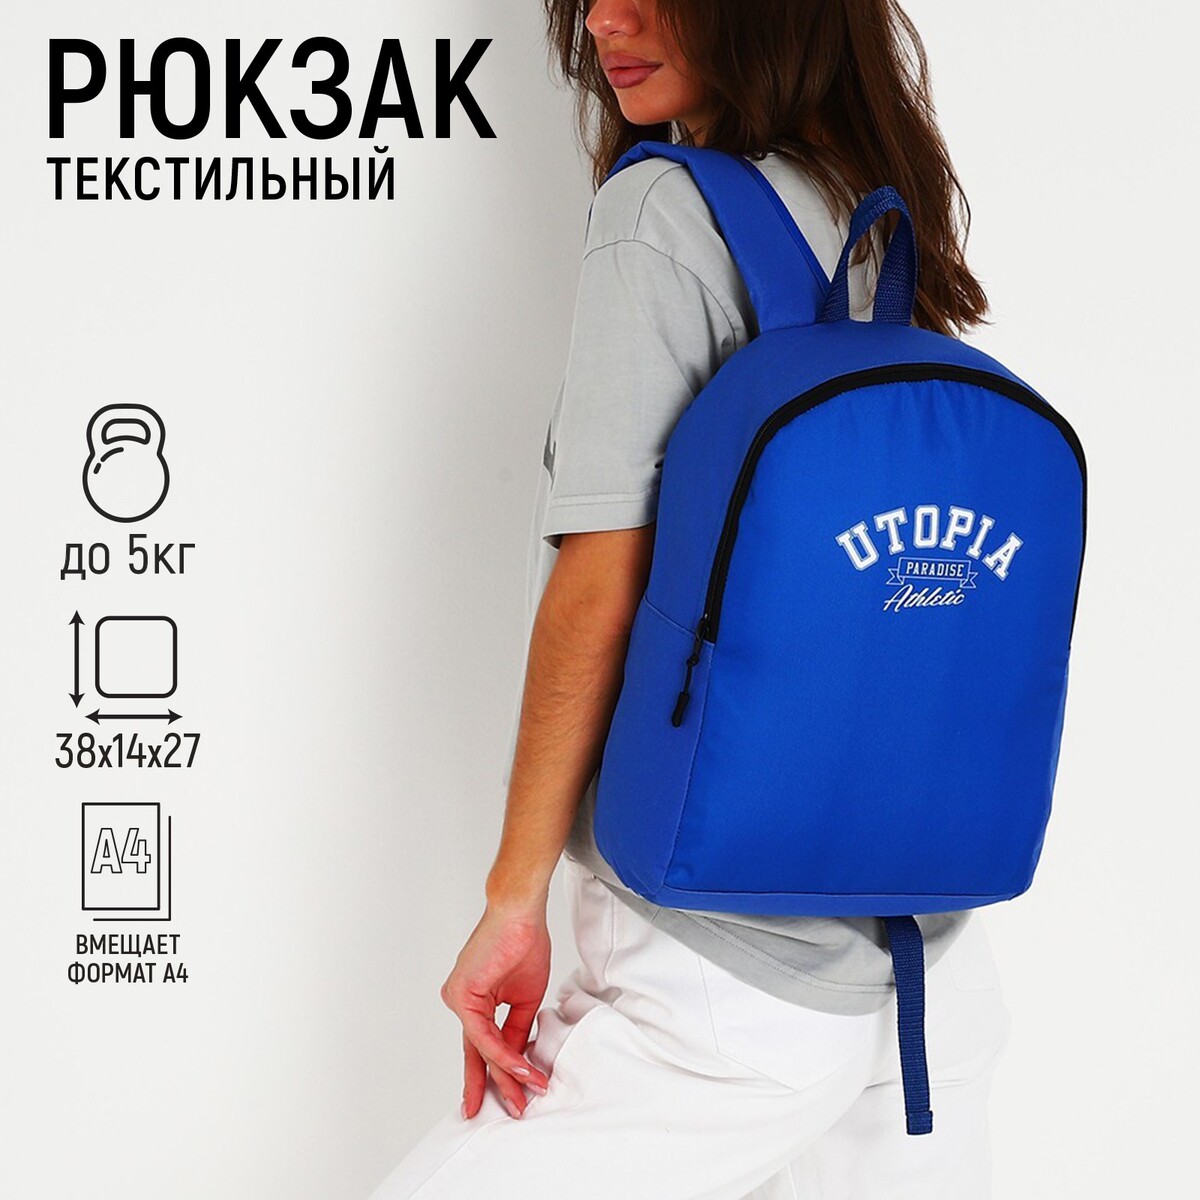 Рюкзак текстильный utopia, 38х14х27 см, цвет синий рюкзак текстильный котики 38х14х27 см